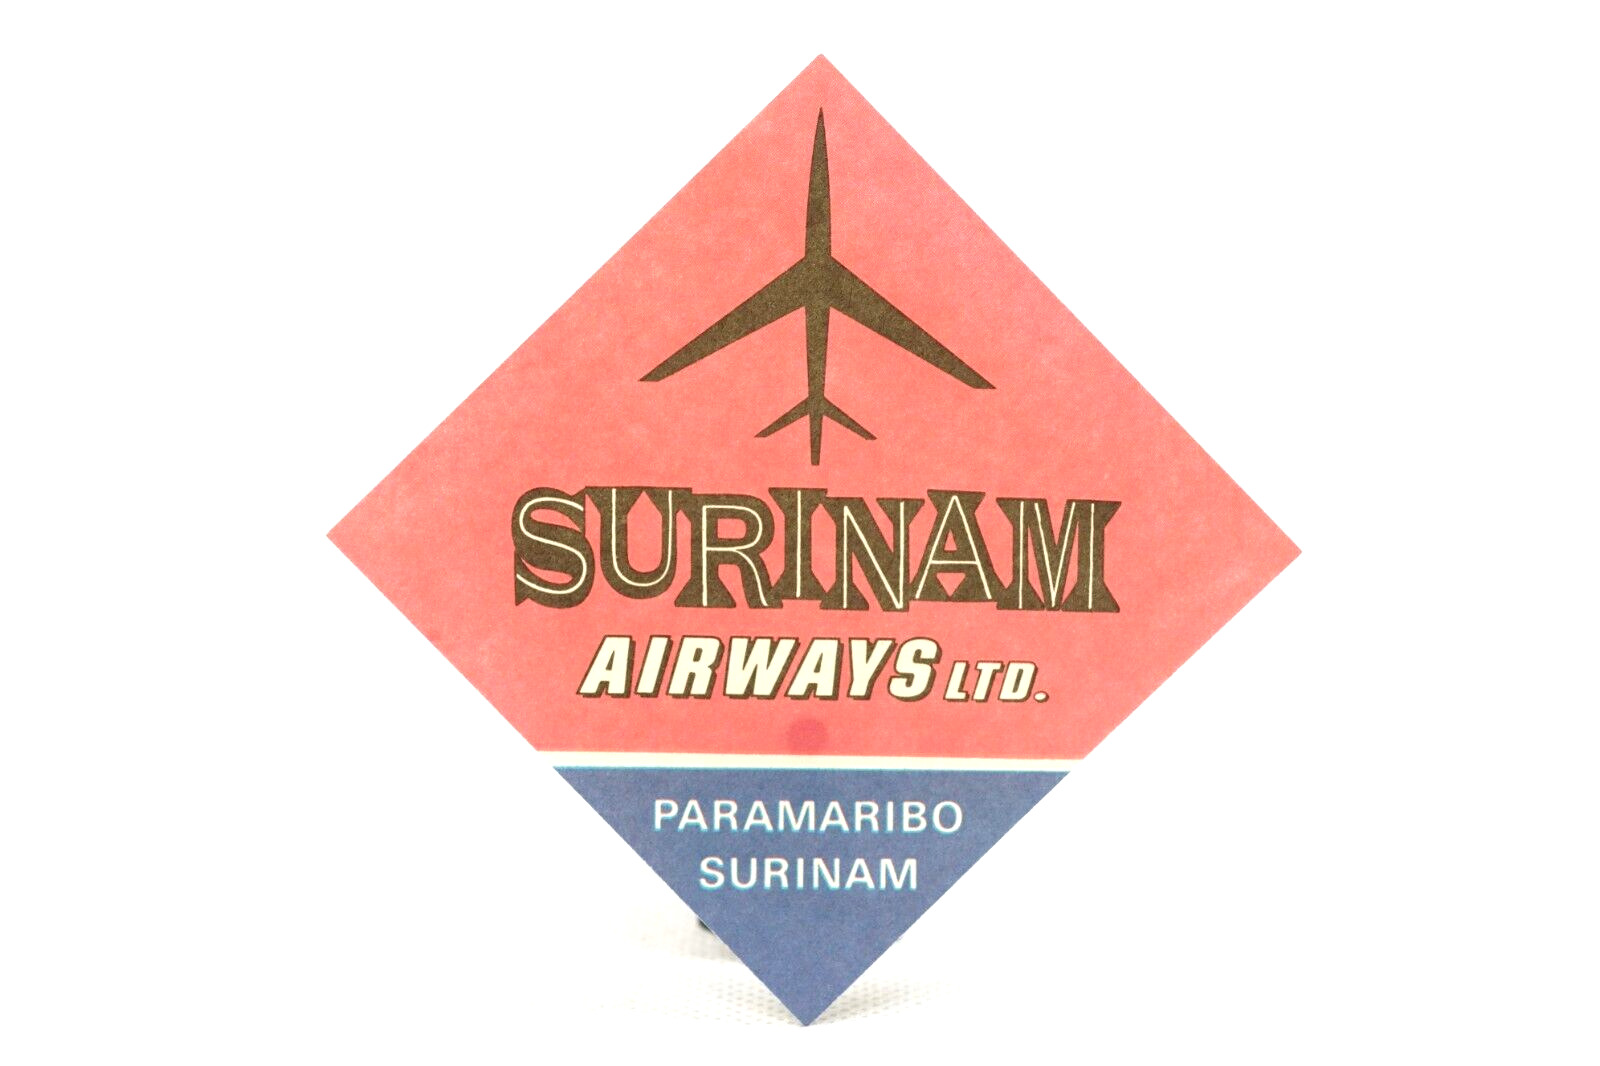 Surinam Airways Ltd Airline Luggage Label Tag MINTY UNUSED 1950's